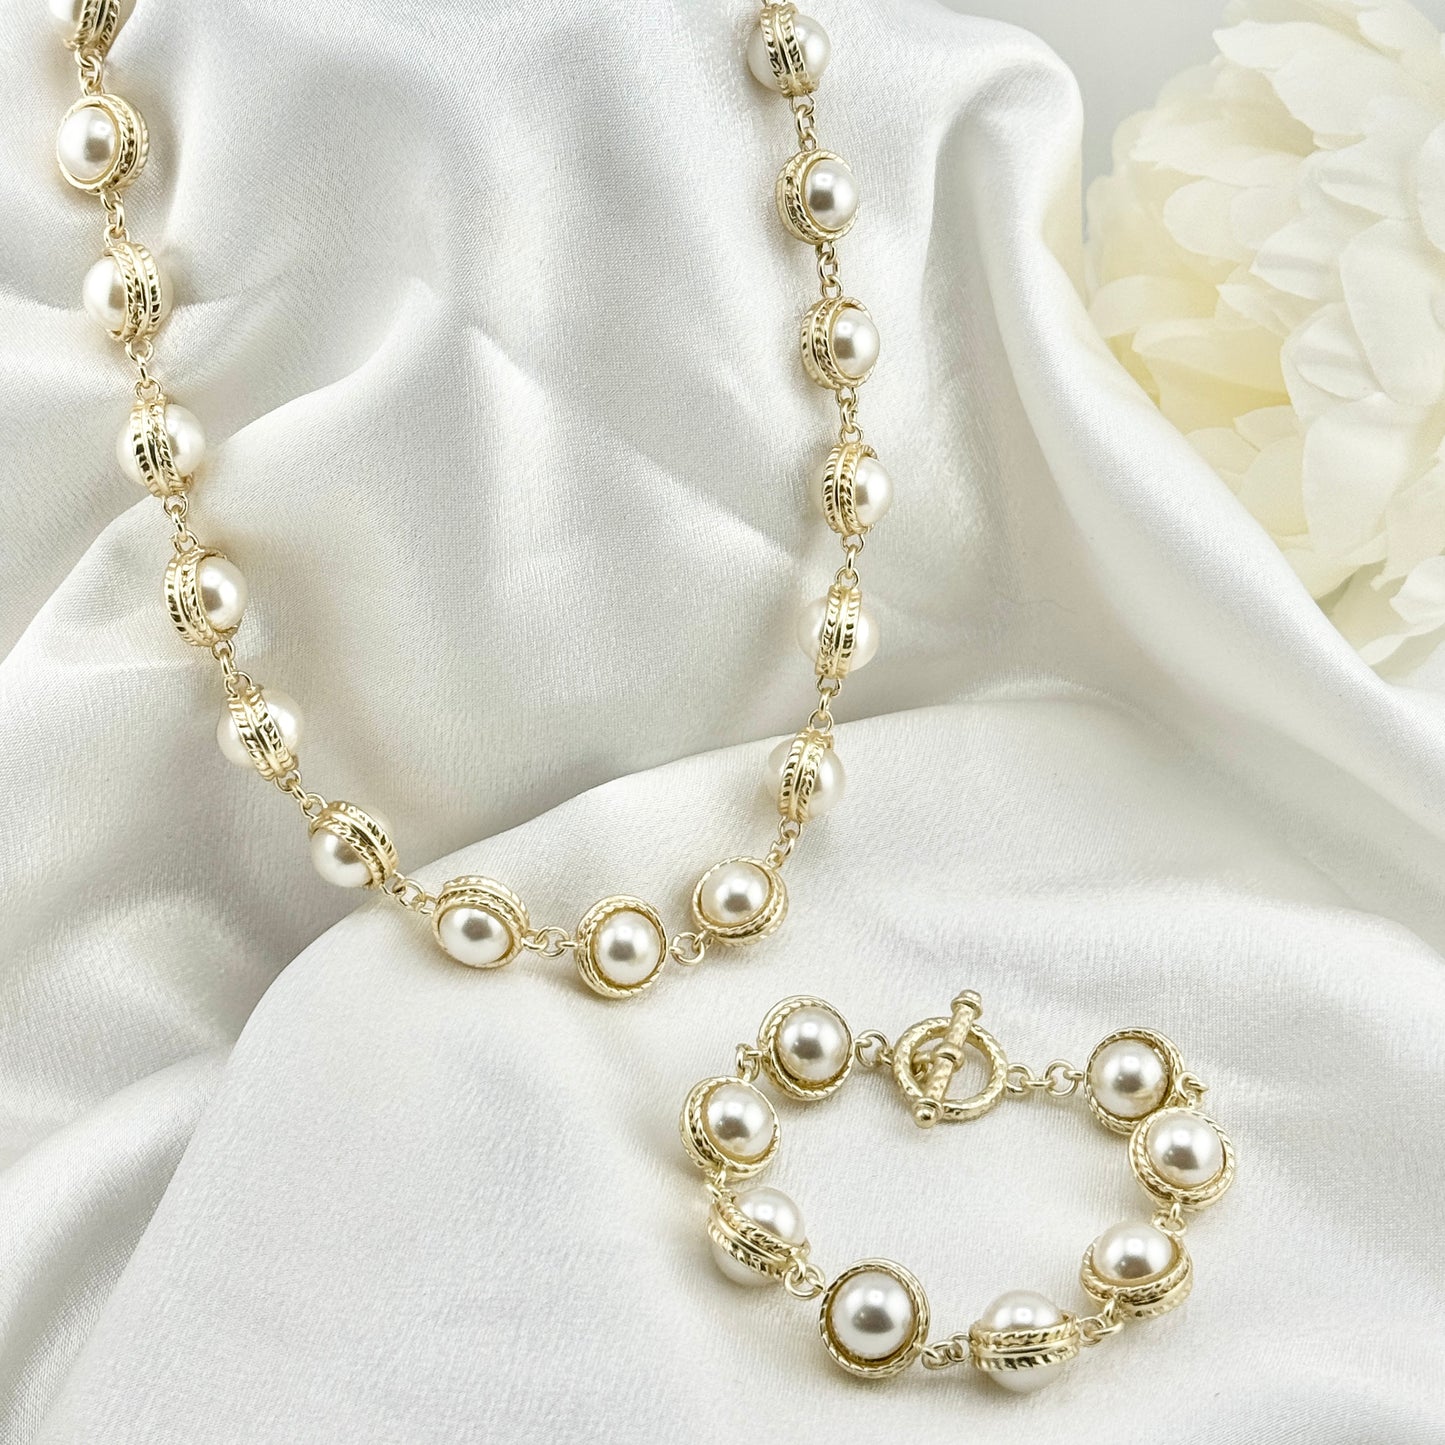 Rumania pearl necklace